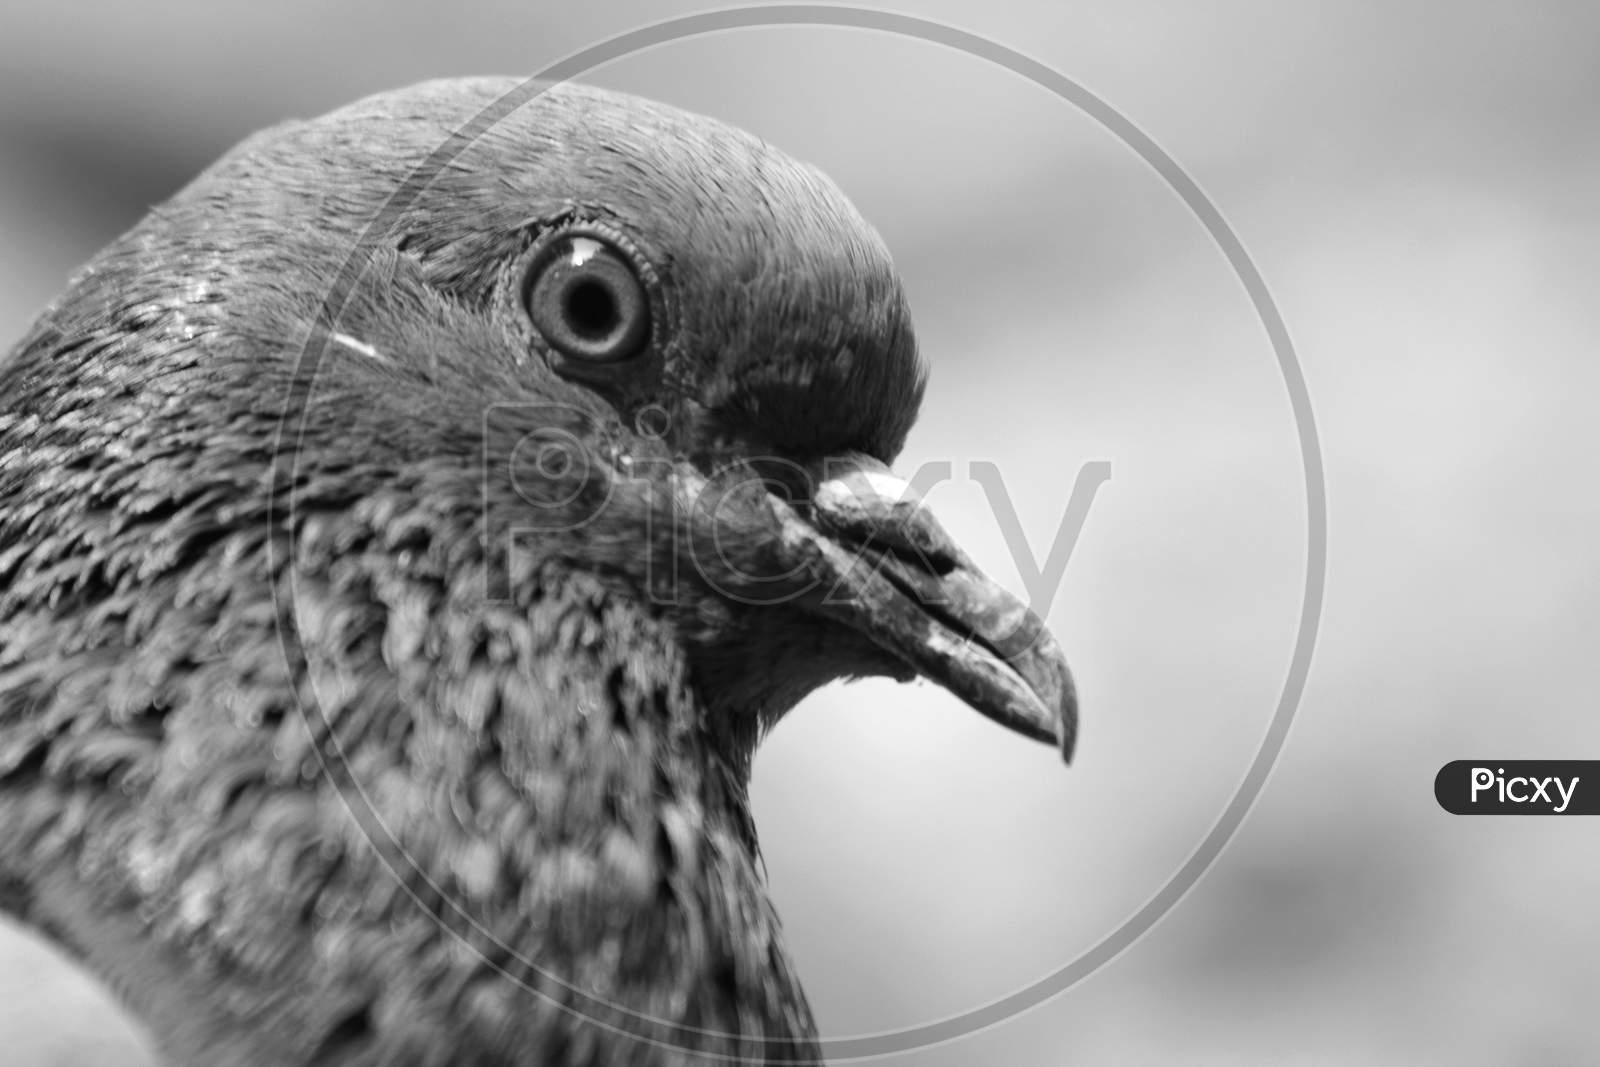 Close up shot of a Pigeon